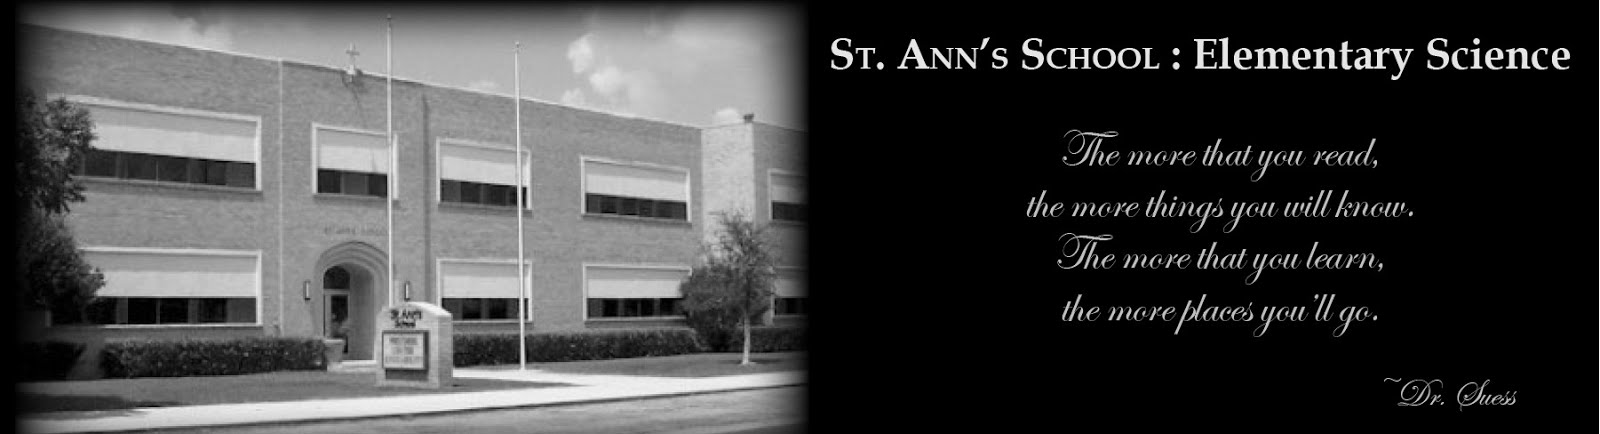 St. Ann's Elementary Science